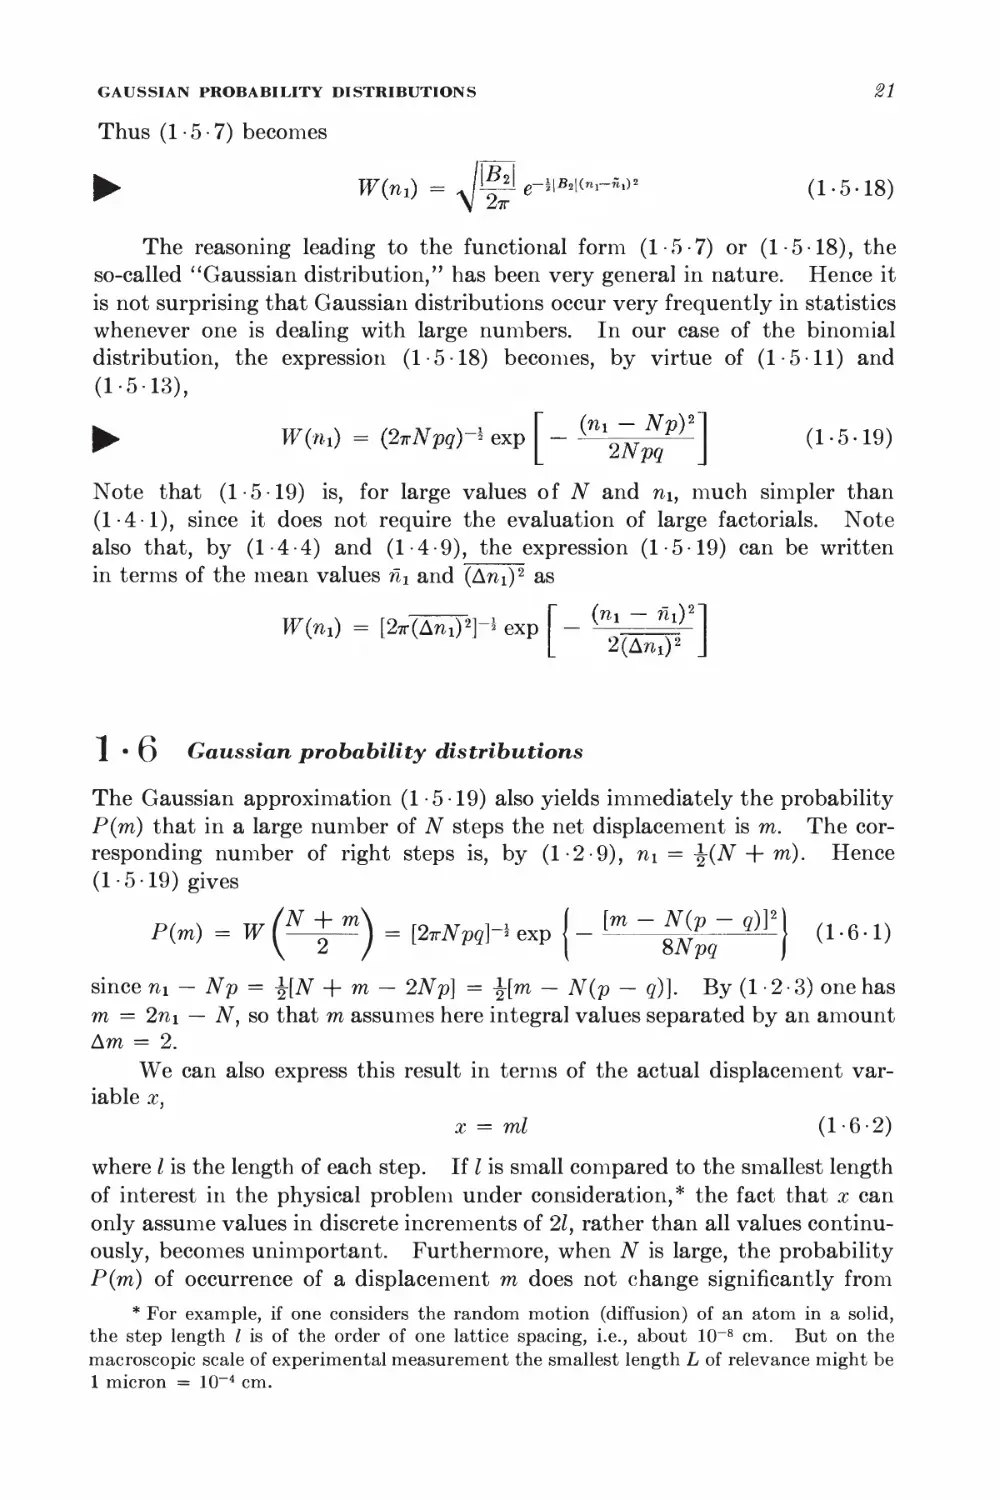 1.6 Gaussian probability distributions